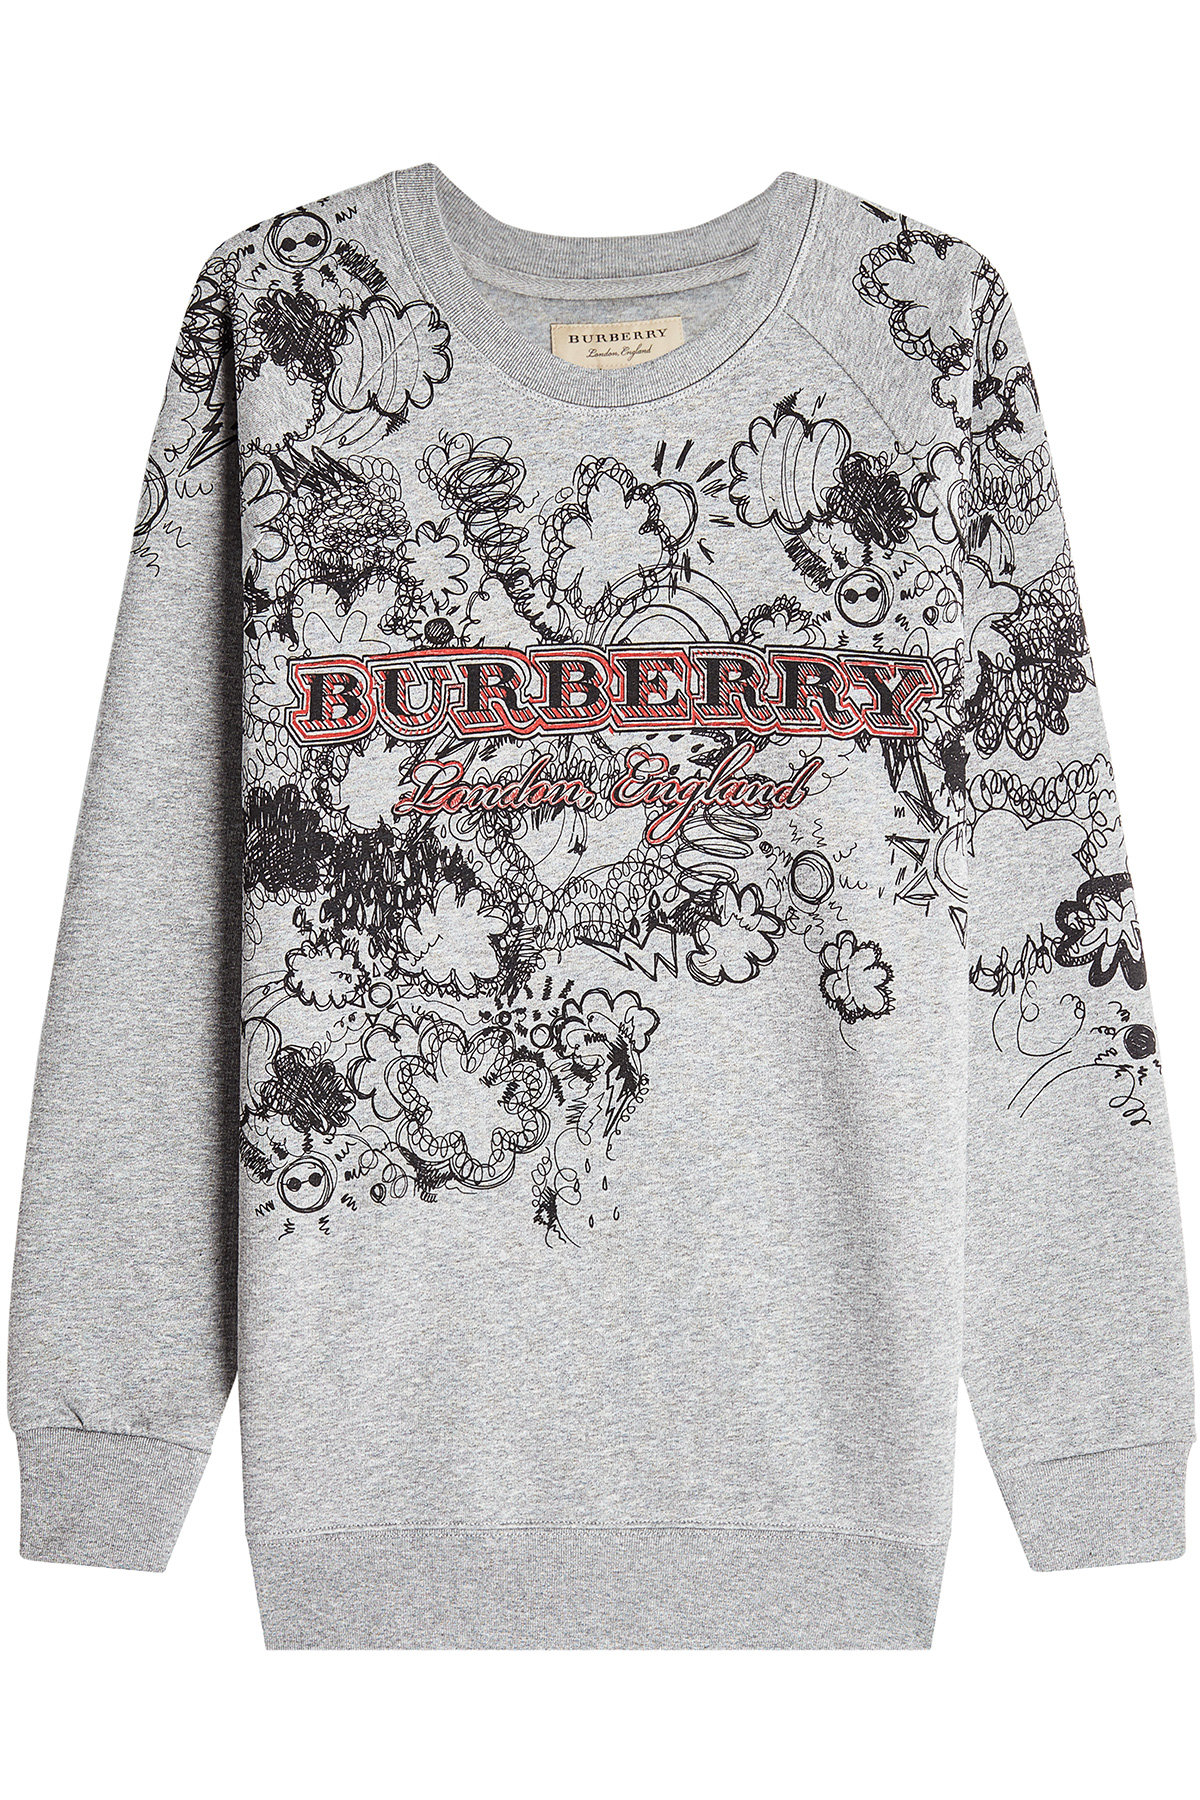 Burberry - Barford Doodle Cotton Sweatshirt